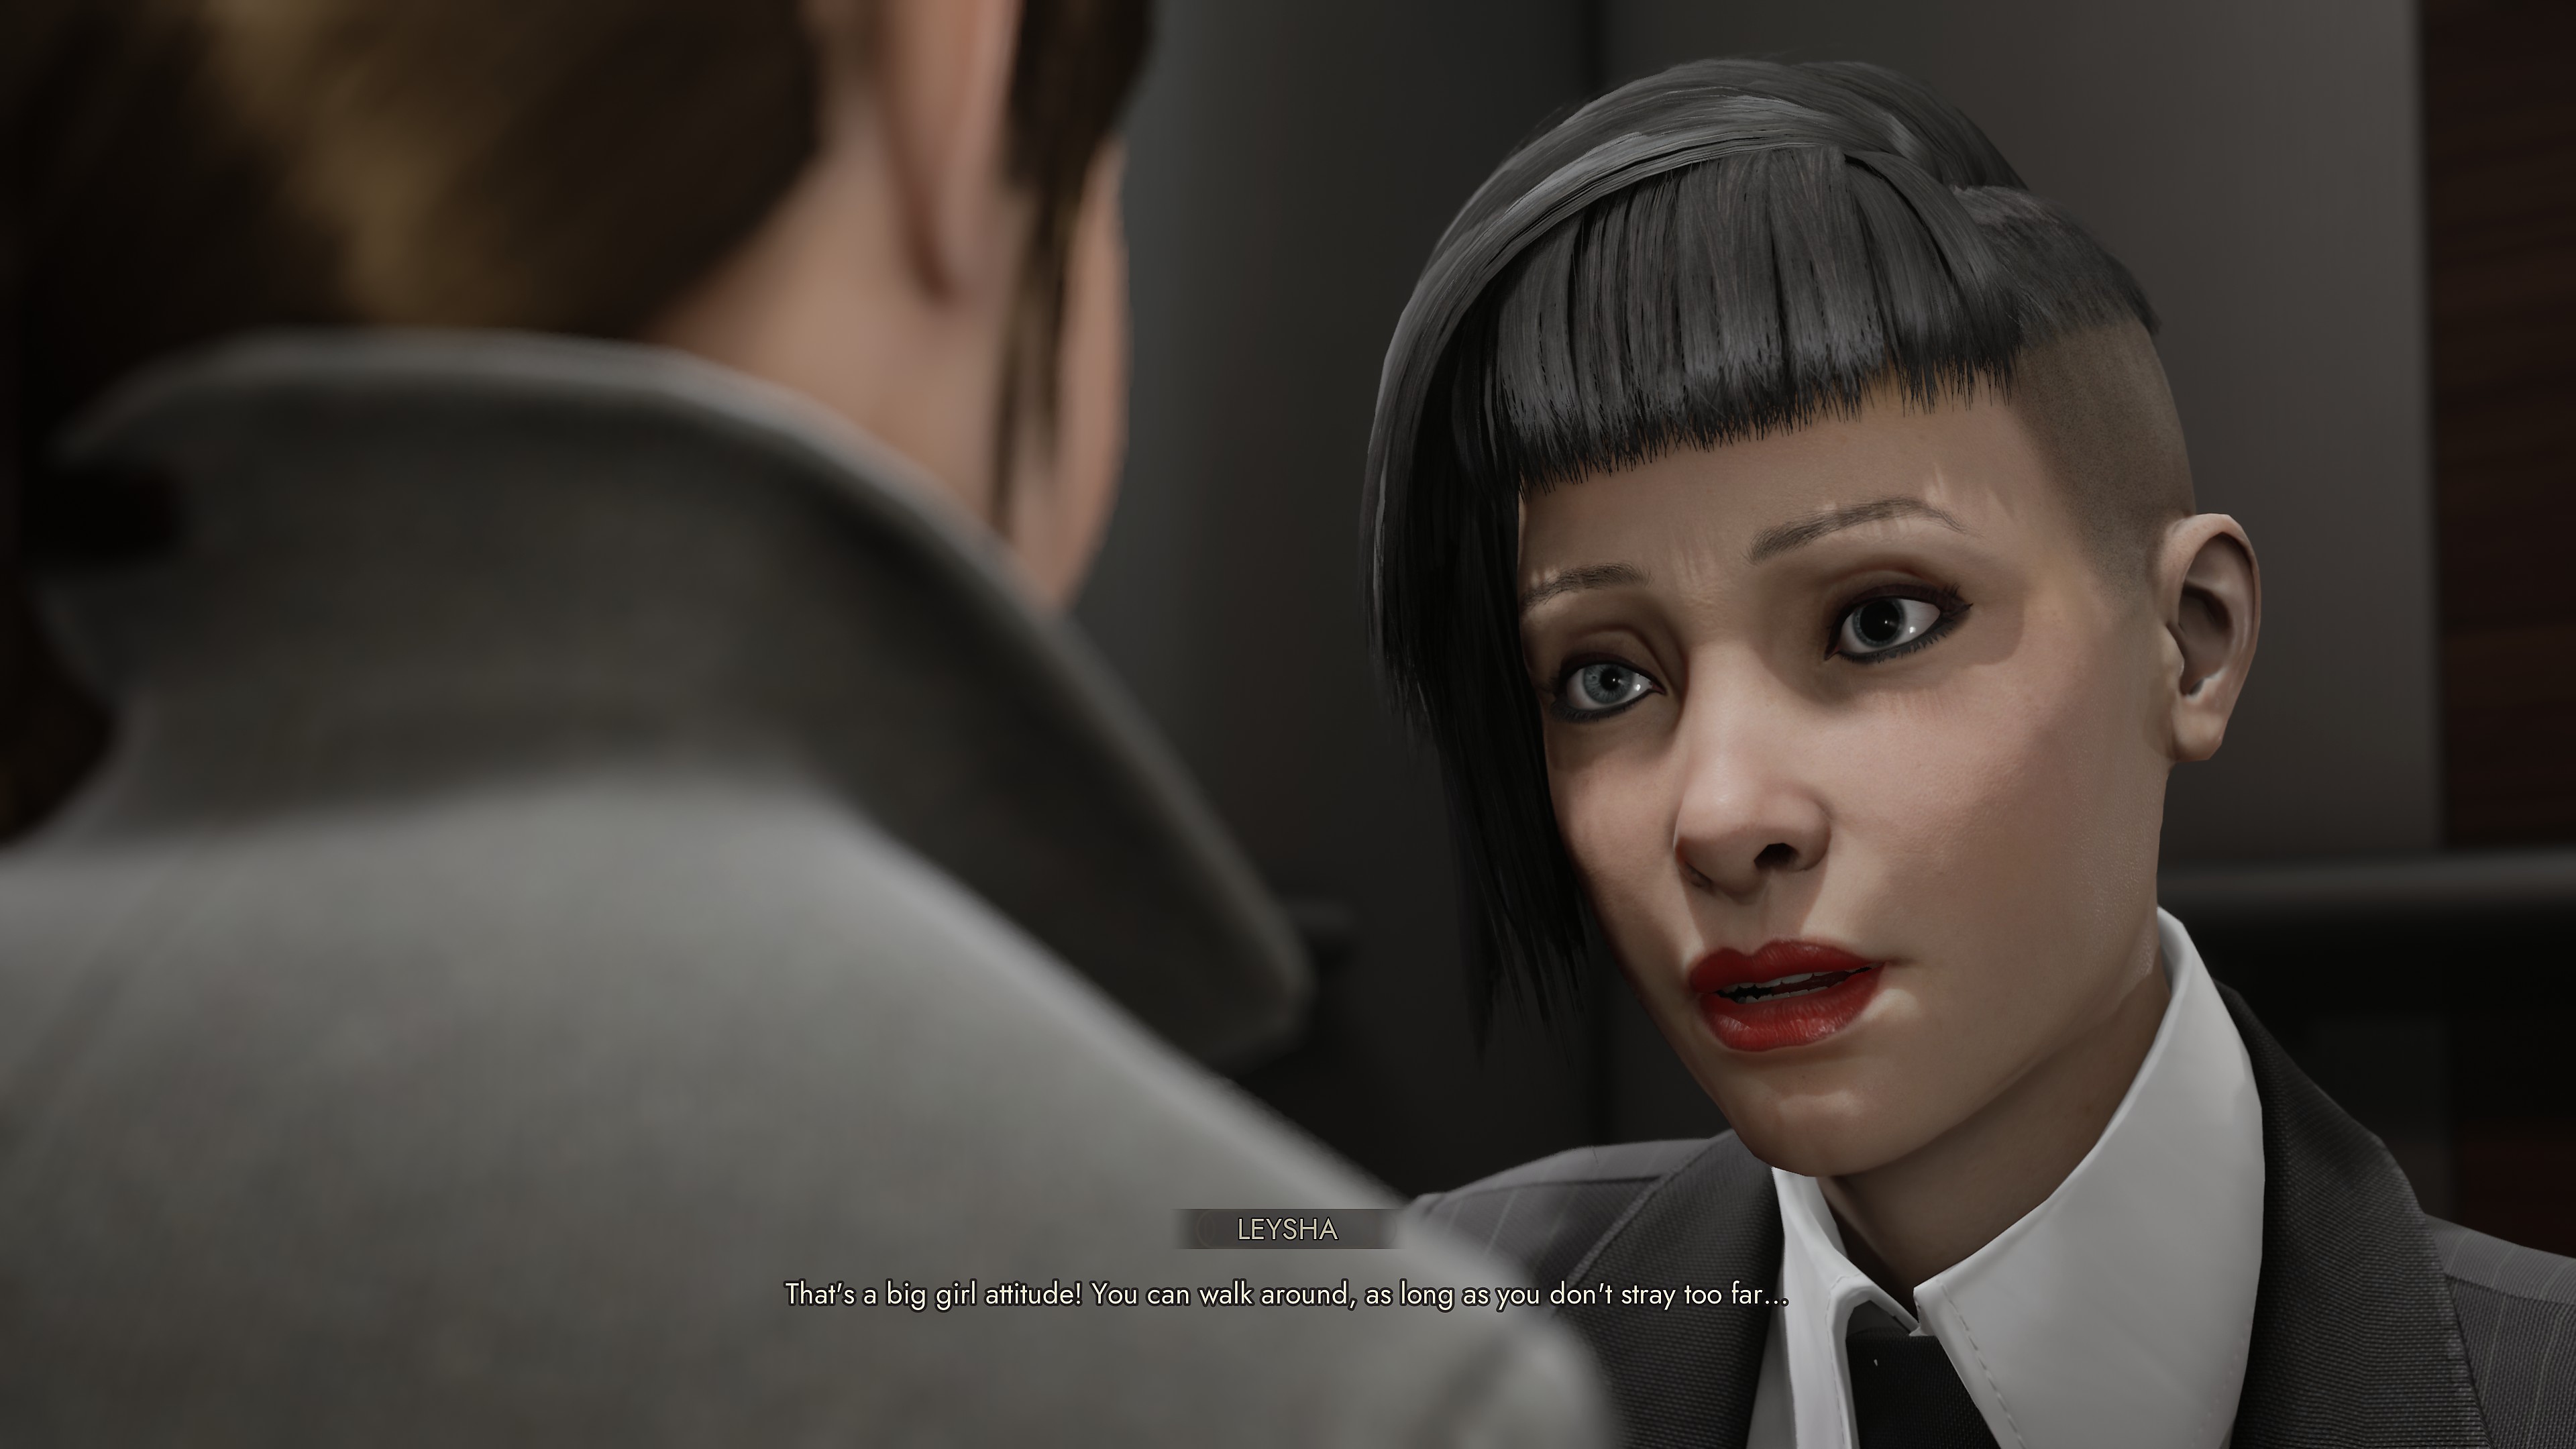 Vampire:‎ The Masquerade - Swansong، لقطة شاشة من اللعبة تظهر فيها شخصيتان تتحدثان